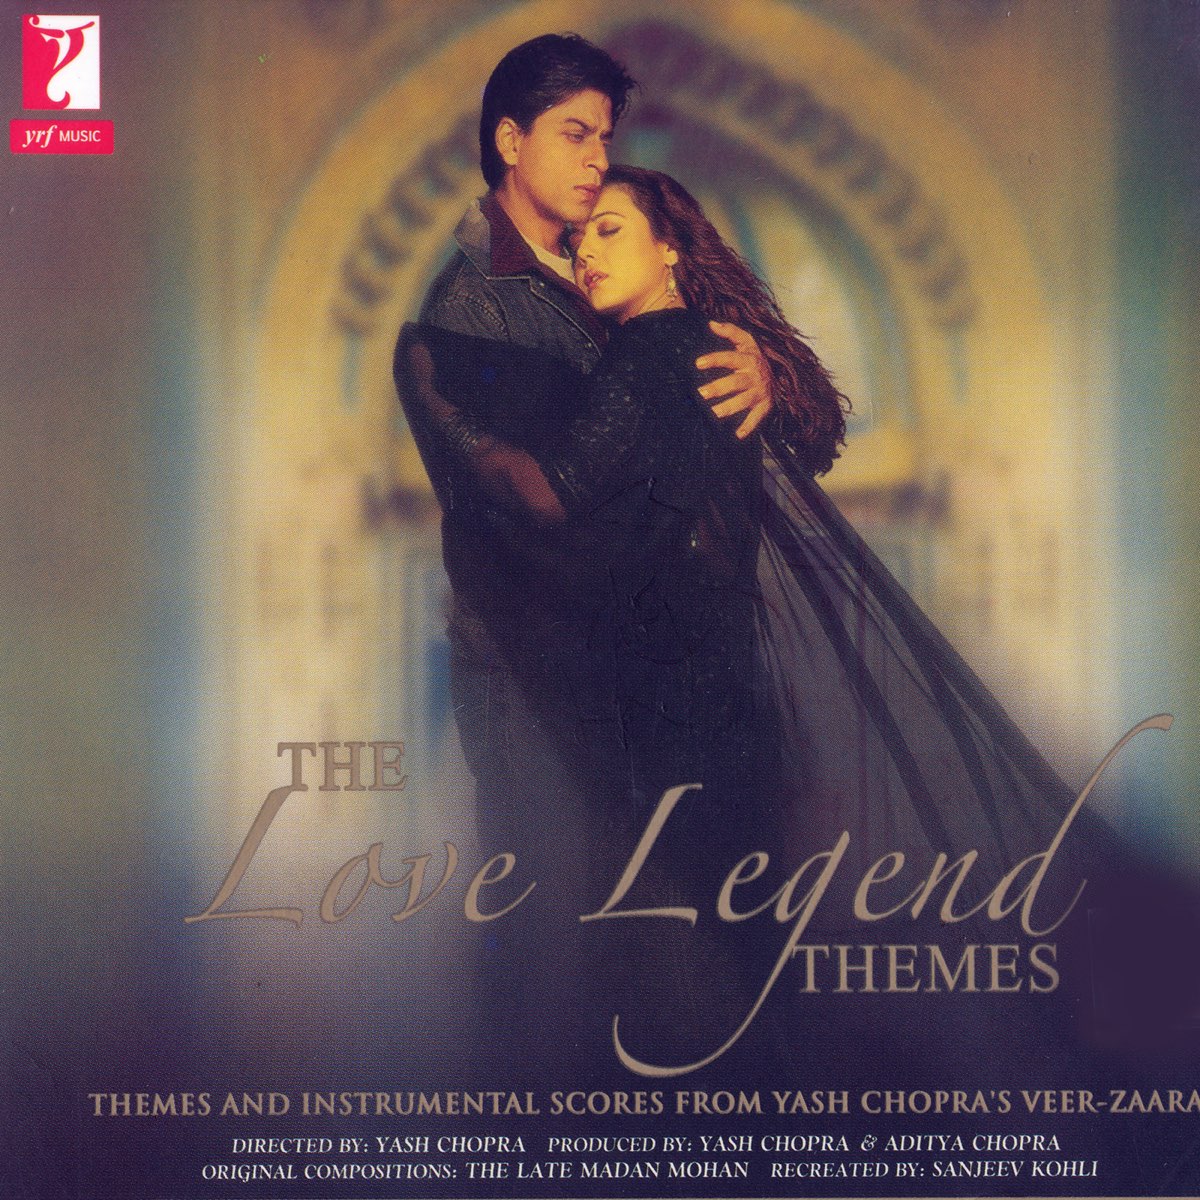 The Love Legend Themes: Veer-Zaara Themes & Instrumental Scores par Madan  Mohan sur Apple Music